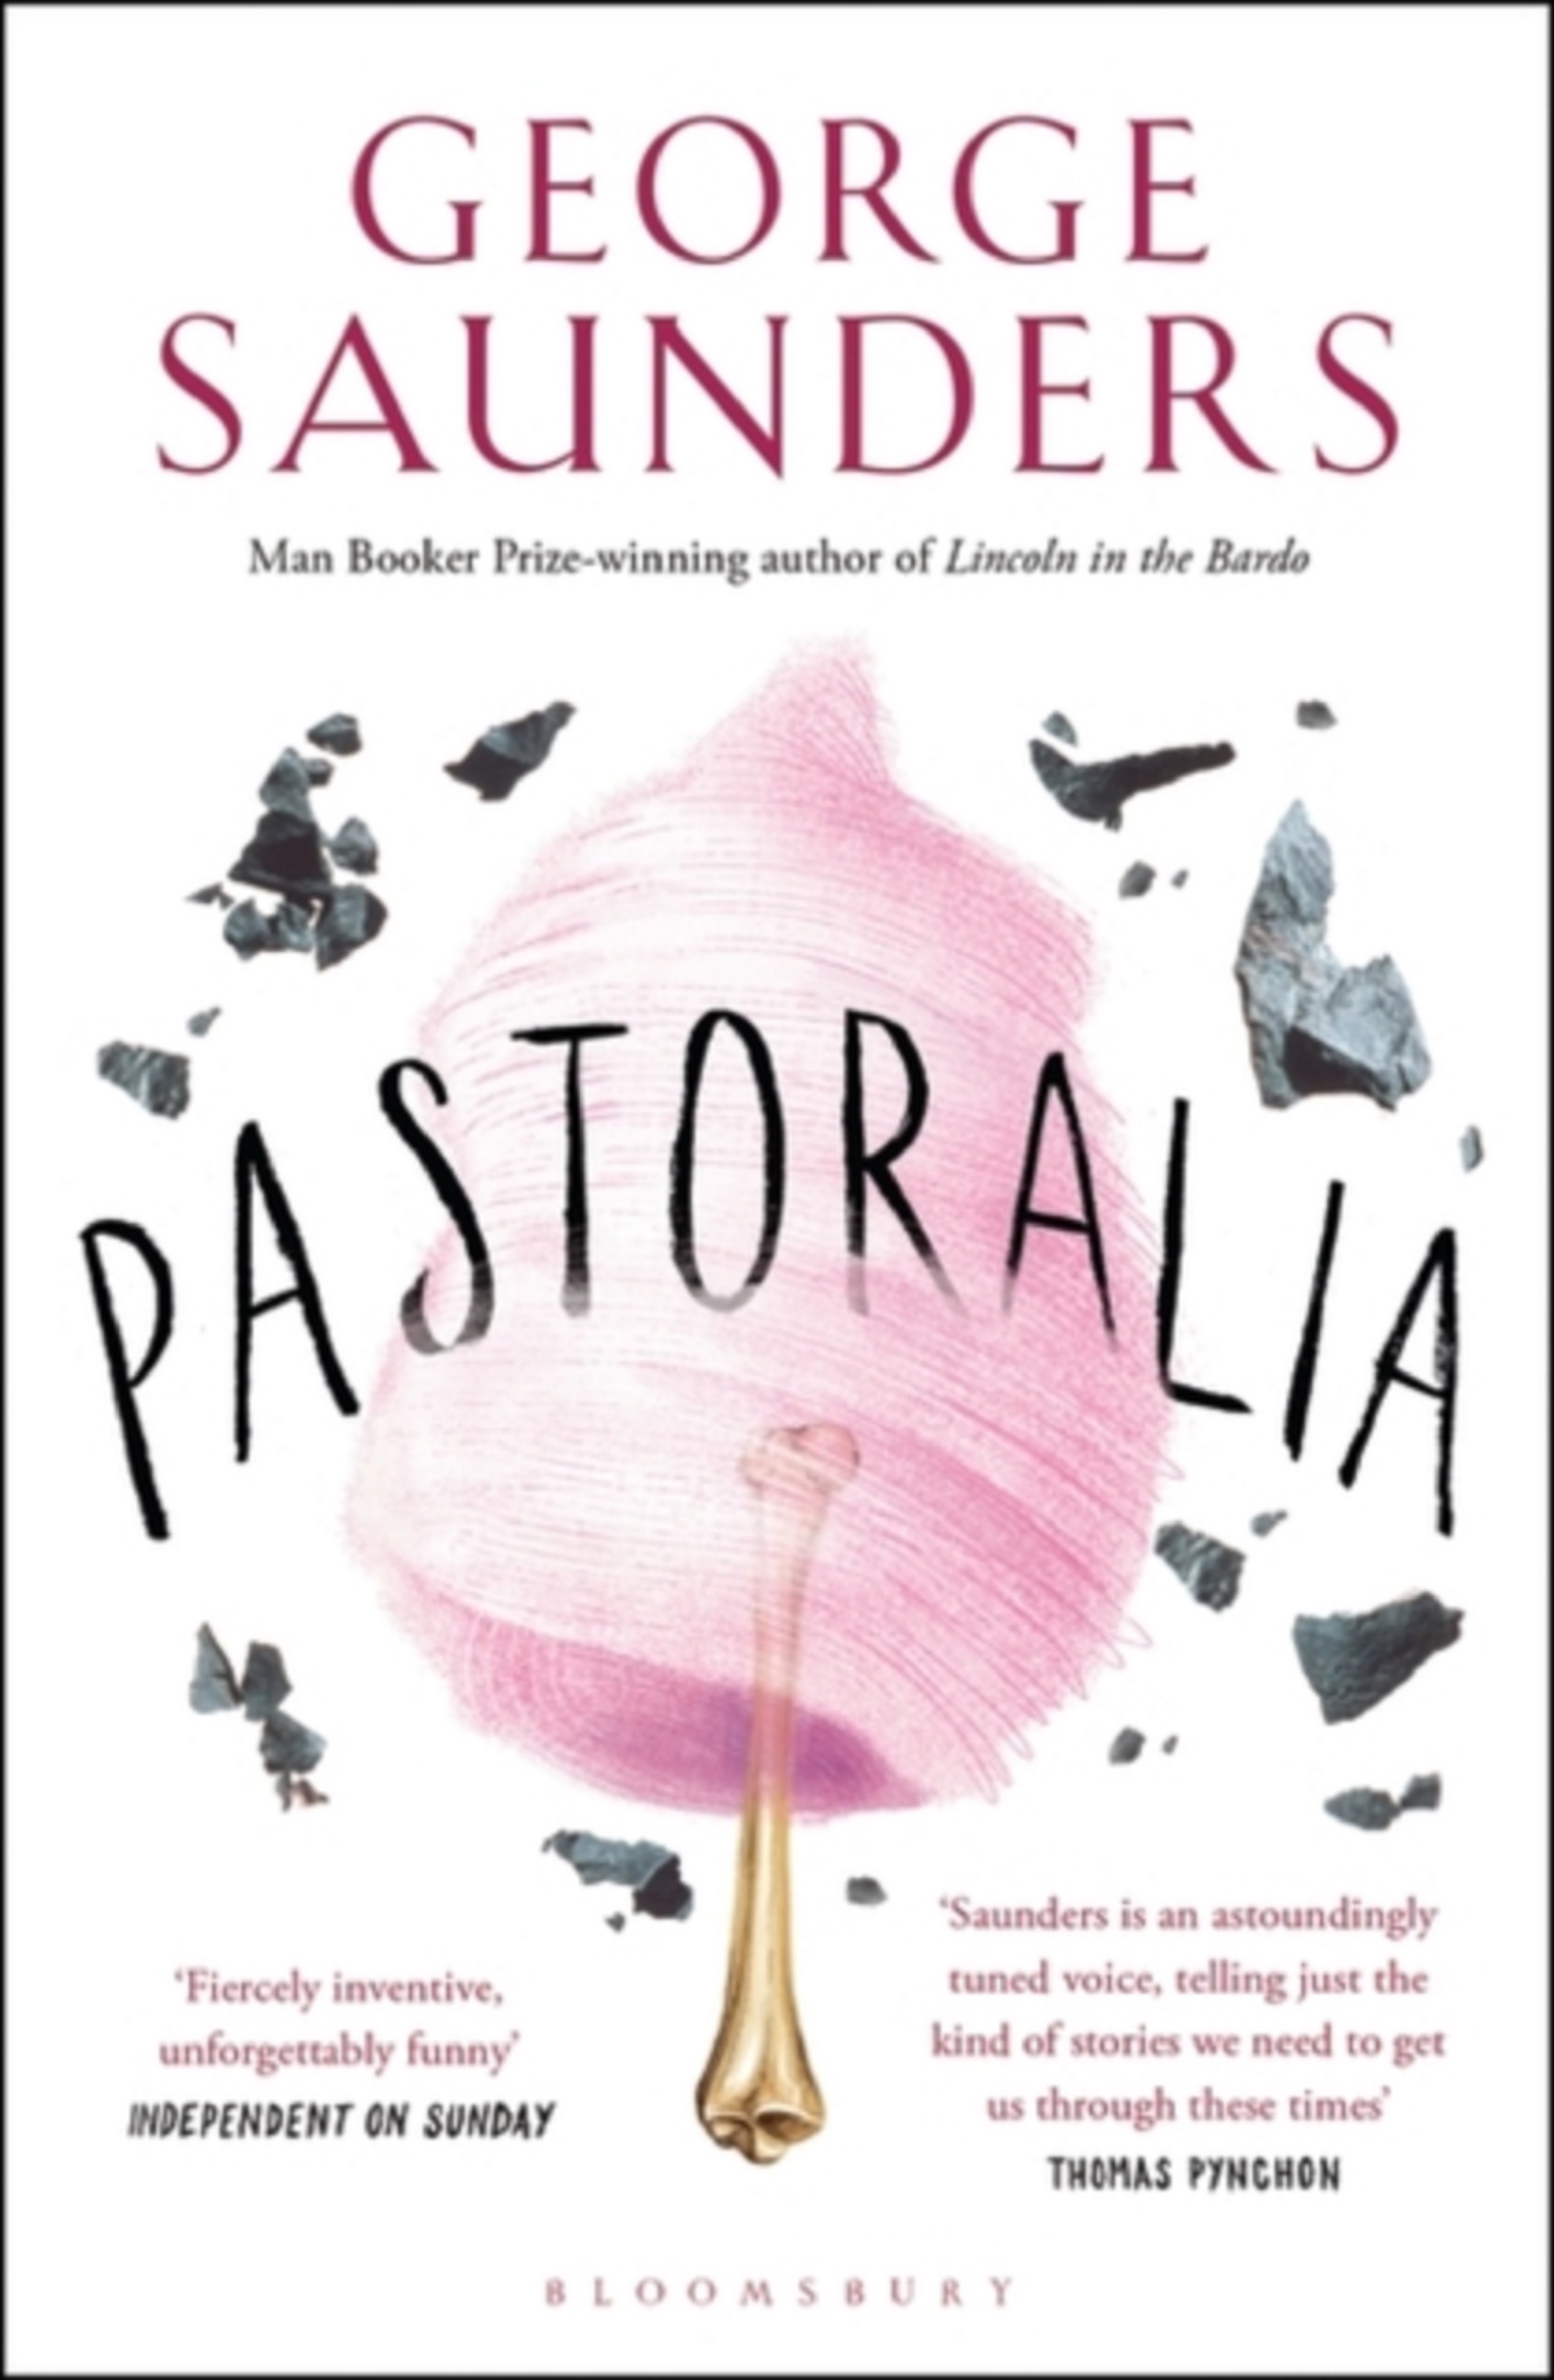 Pastoralia | George Saunders